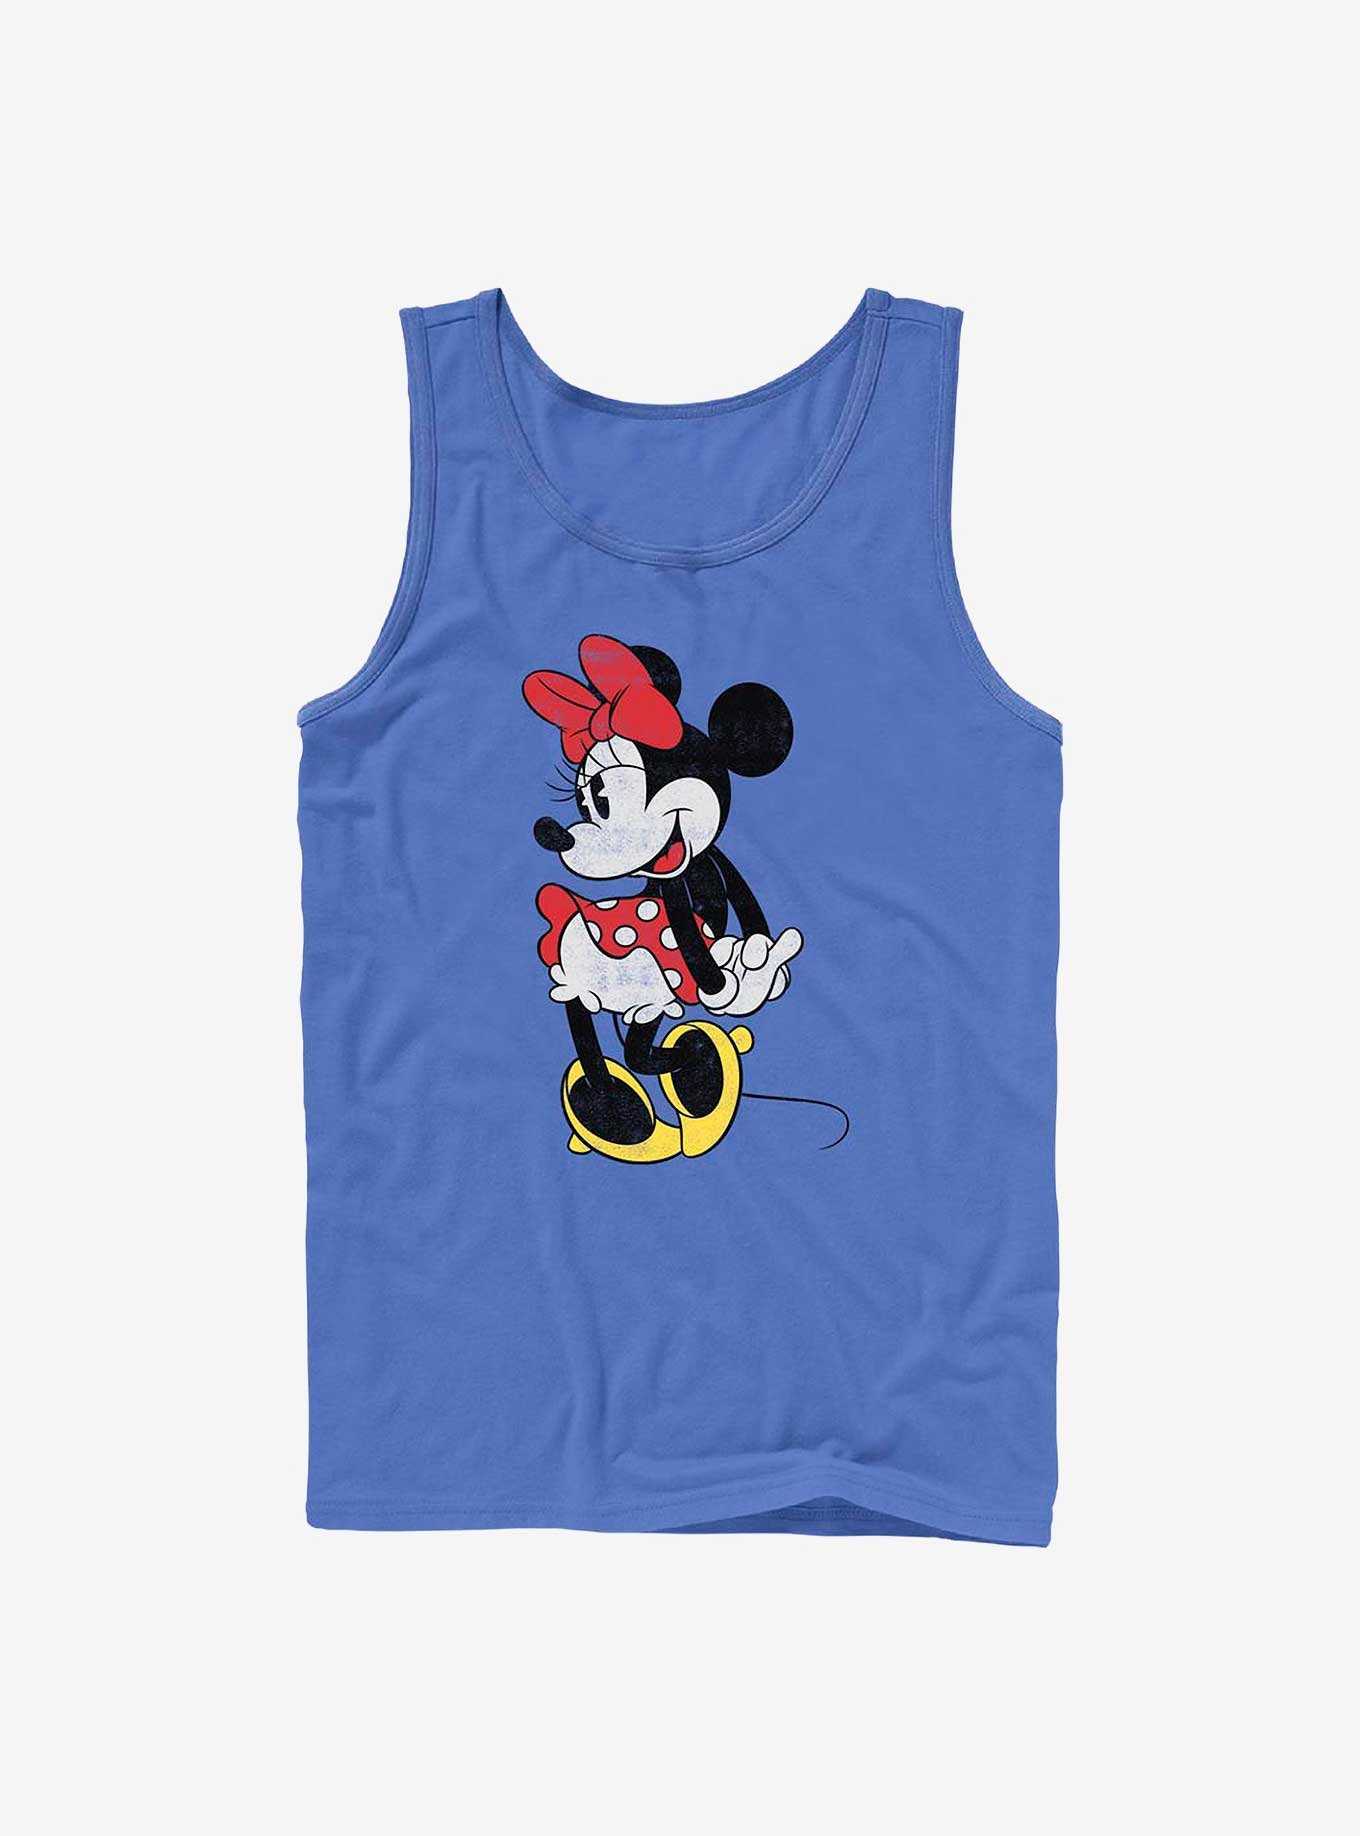 Mickey Mouse Lounge Tank Top for Men - Walt Disney World